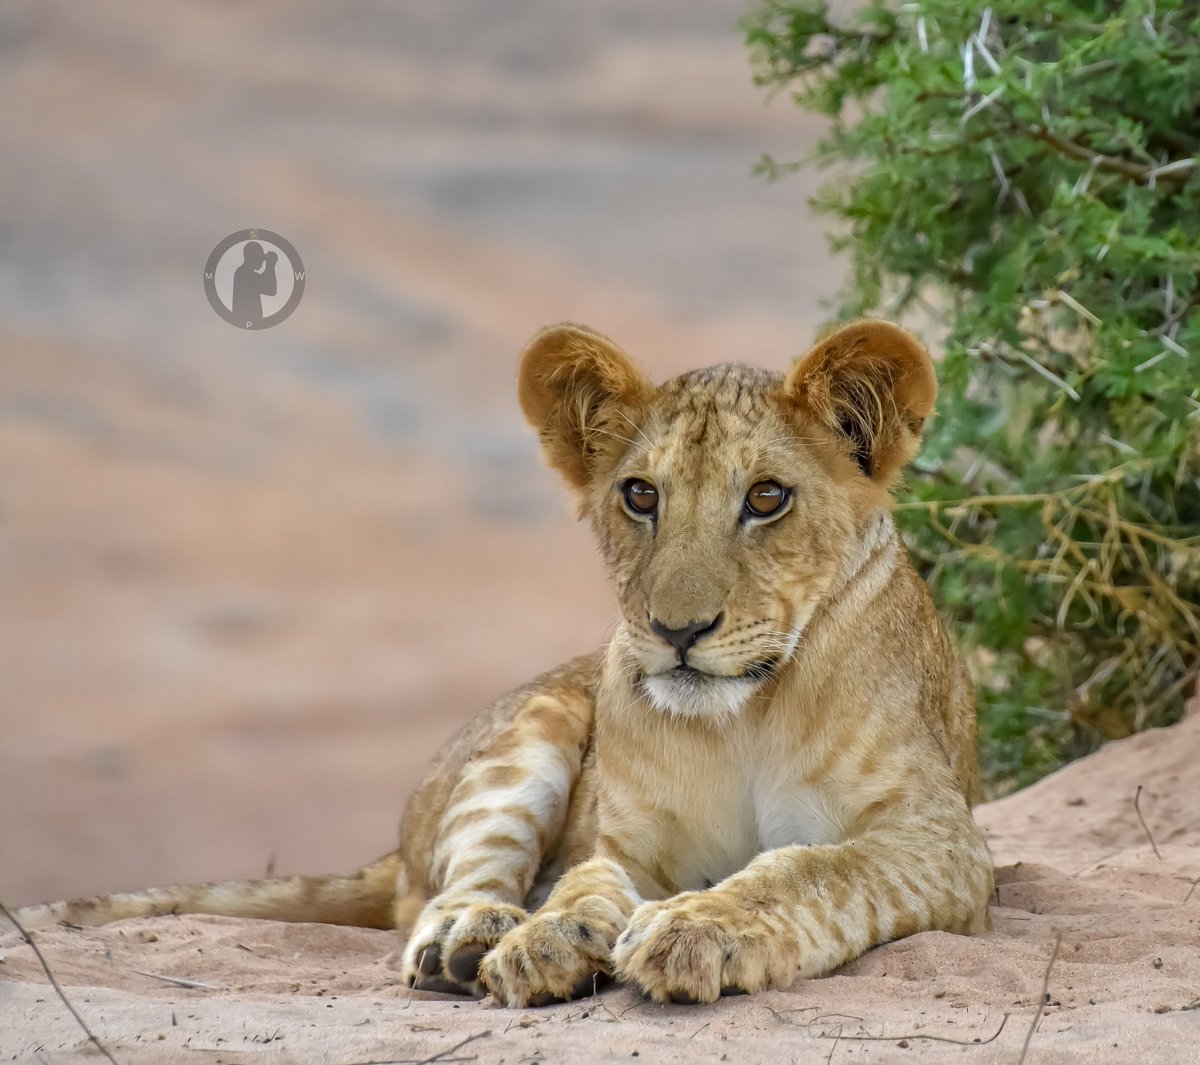 Cute little fella.King in the making.

Samburu National Reserve,Kenya.

#martowanjohiphotography #safaris254 #safariswithmartowanjohi #natgeokenya #wildlifephotography #nikon #tamronlens #africa #kenya #lions #bigcatdiaries #twitternaturecommunity #photographicsafaris #bdasafaris